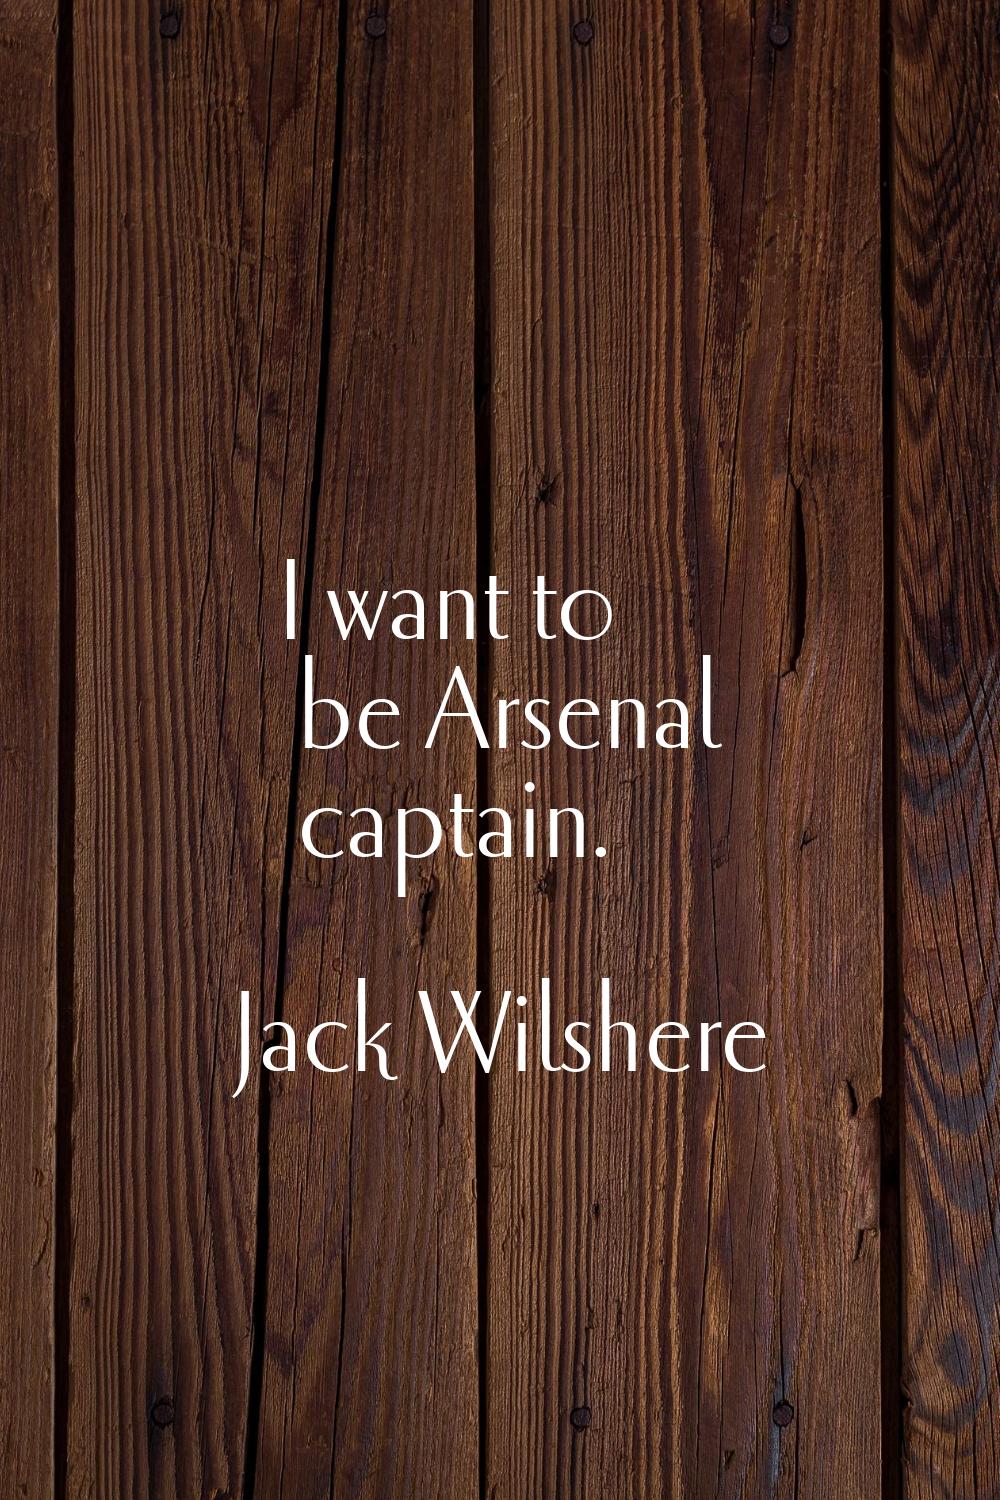 I want to be Arsenal captain.